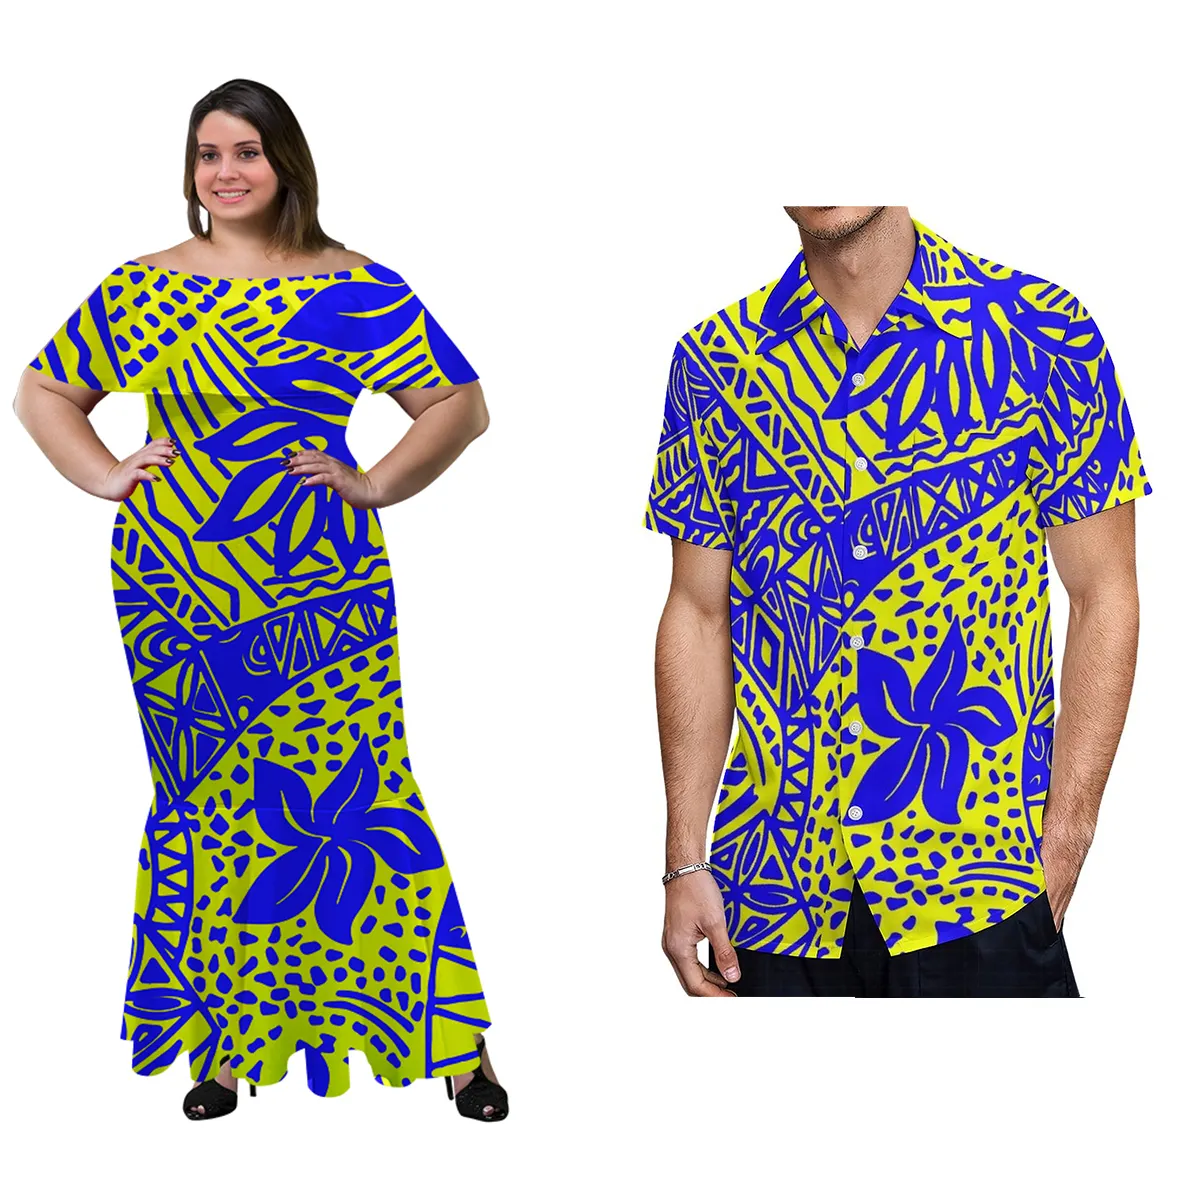 Grüne und blaue Frauen geschichteten Rüschen Schulter Meerjungfrau Kleider Polynesian Hawaiian Tribal Design Big People Herren Aloha Shirt